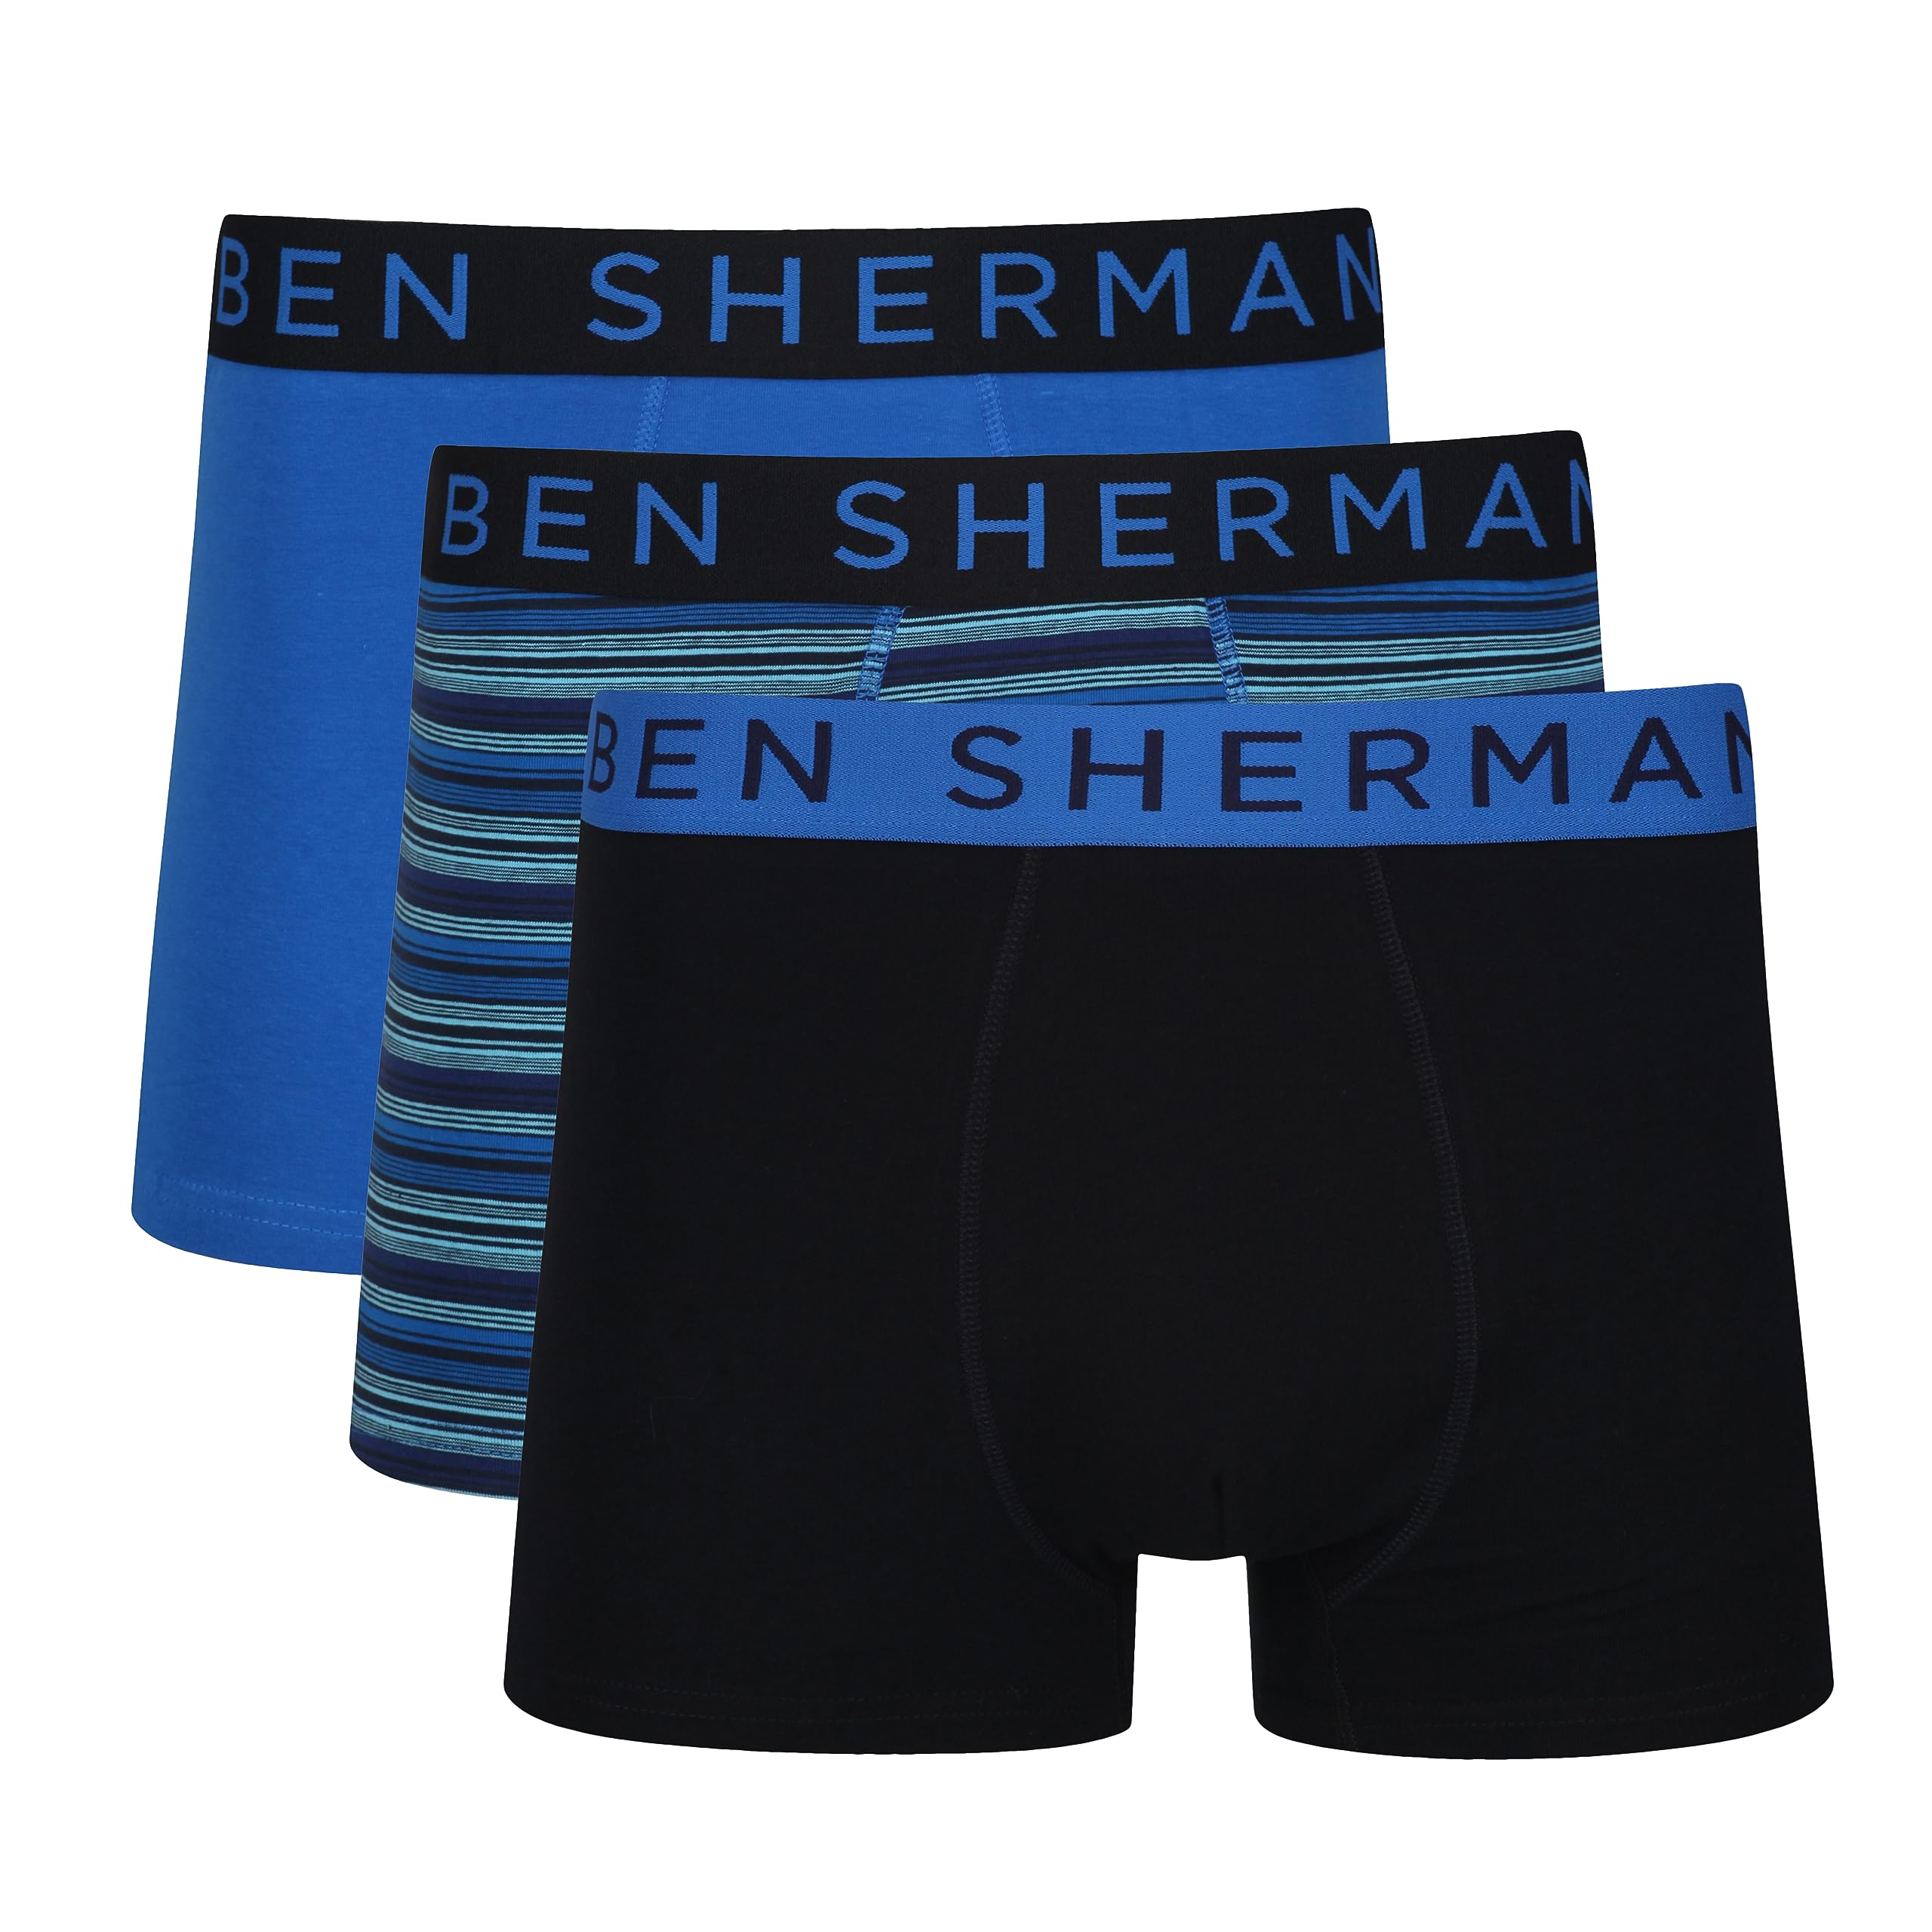 Ben Sherman Herren Men's Boxer Shorts in Blue/Stripe/Black | Soft Touch Cotton Rich Trunks with Elasticated Waistband Boxershorts, Blue/Stripe/Black,